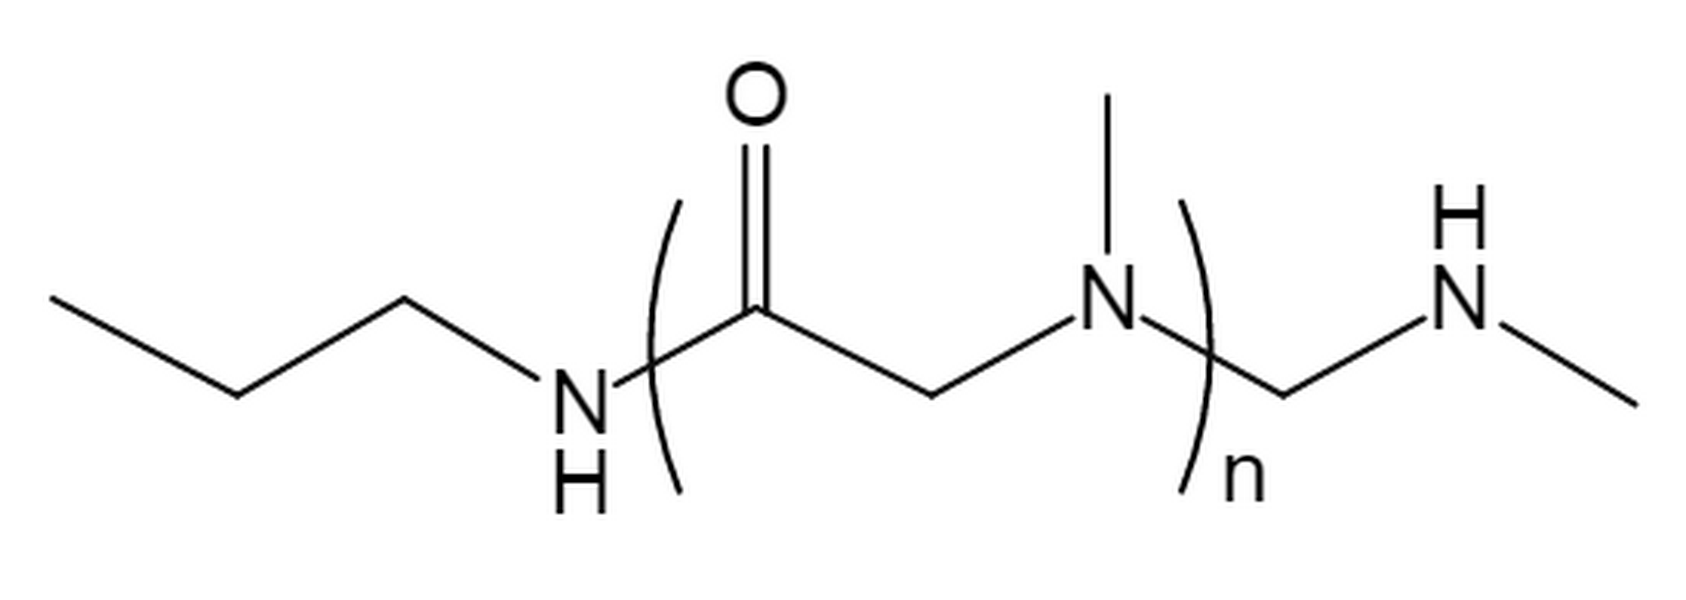 Polysarcosine20